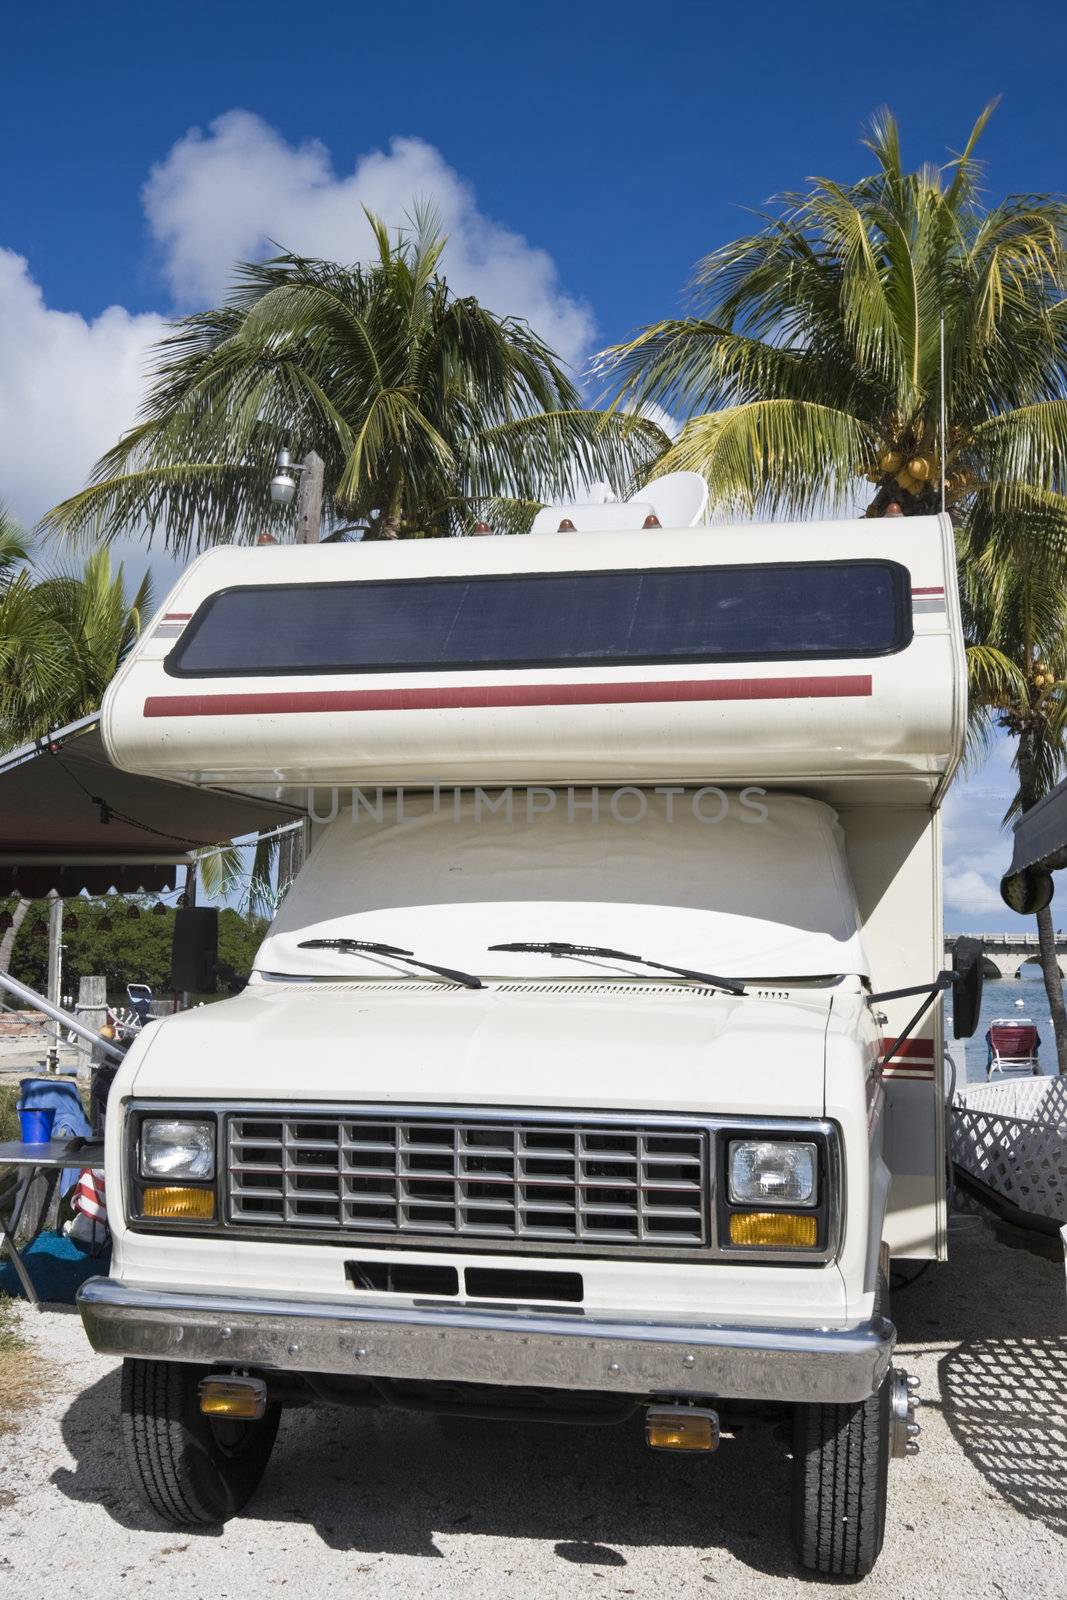 RV parked under palms - Florida